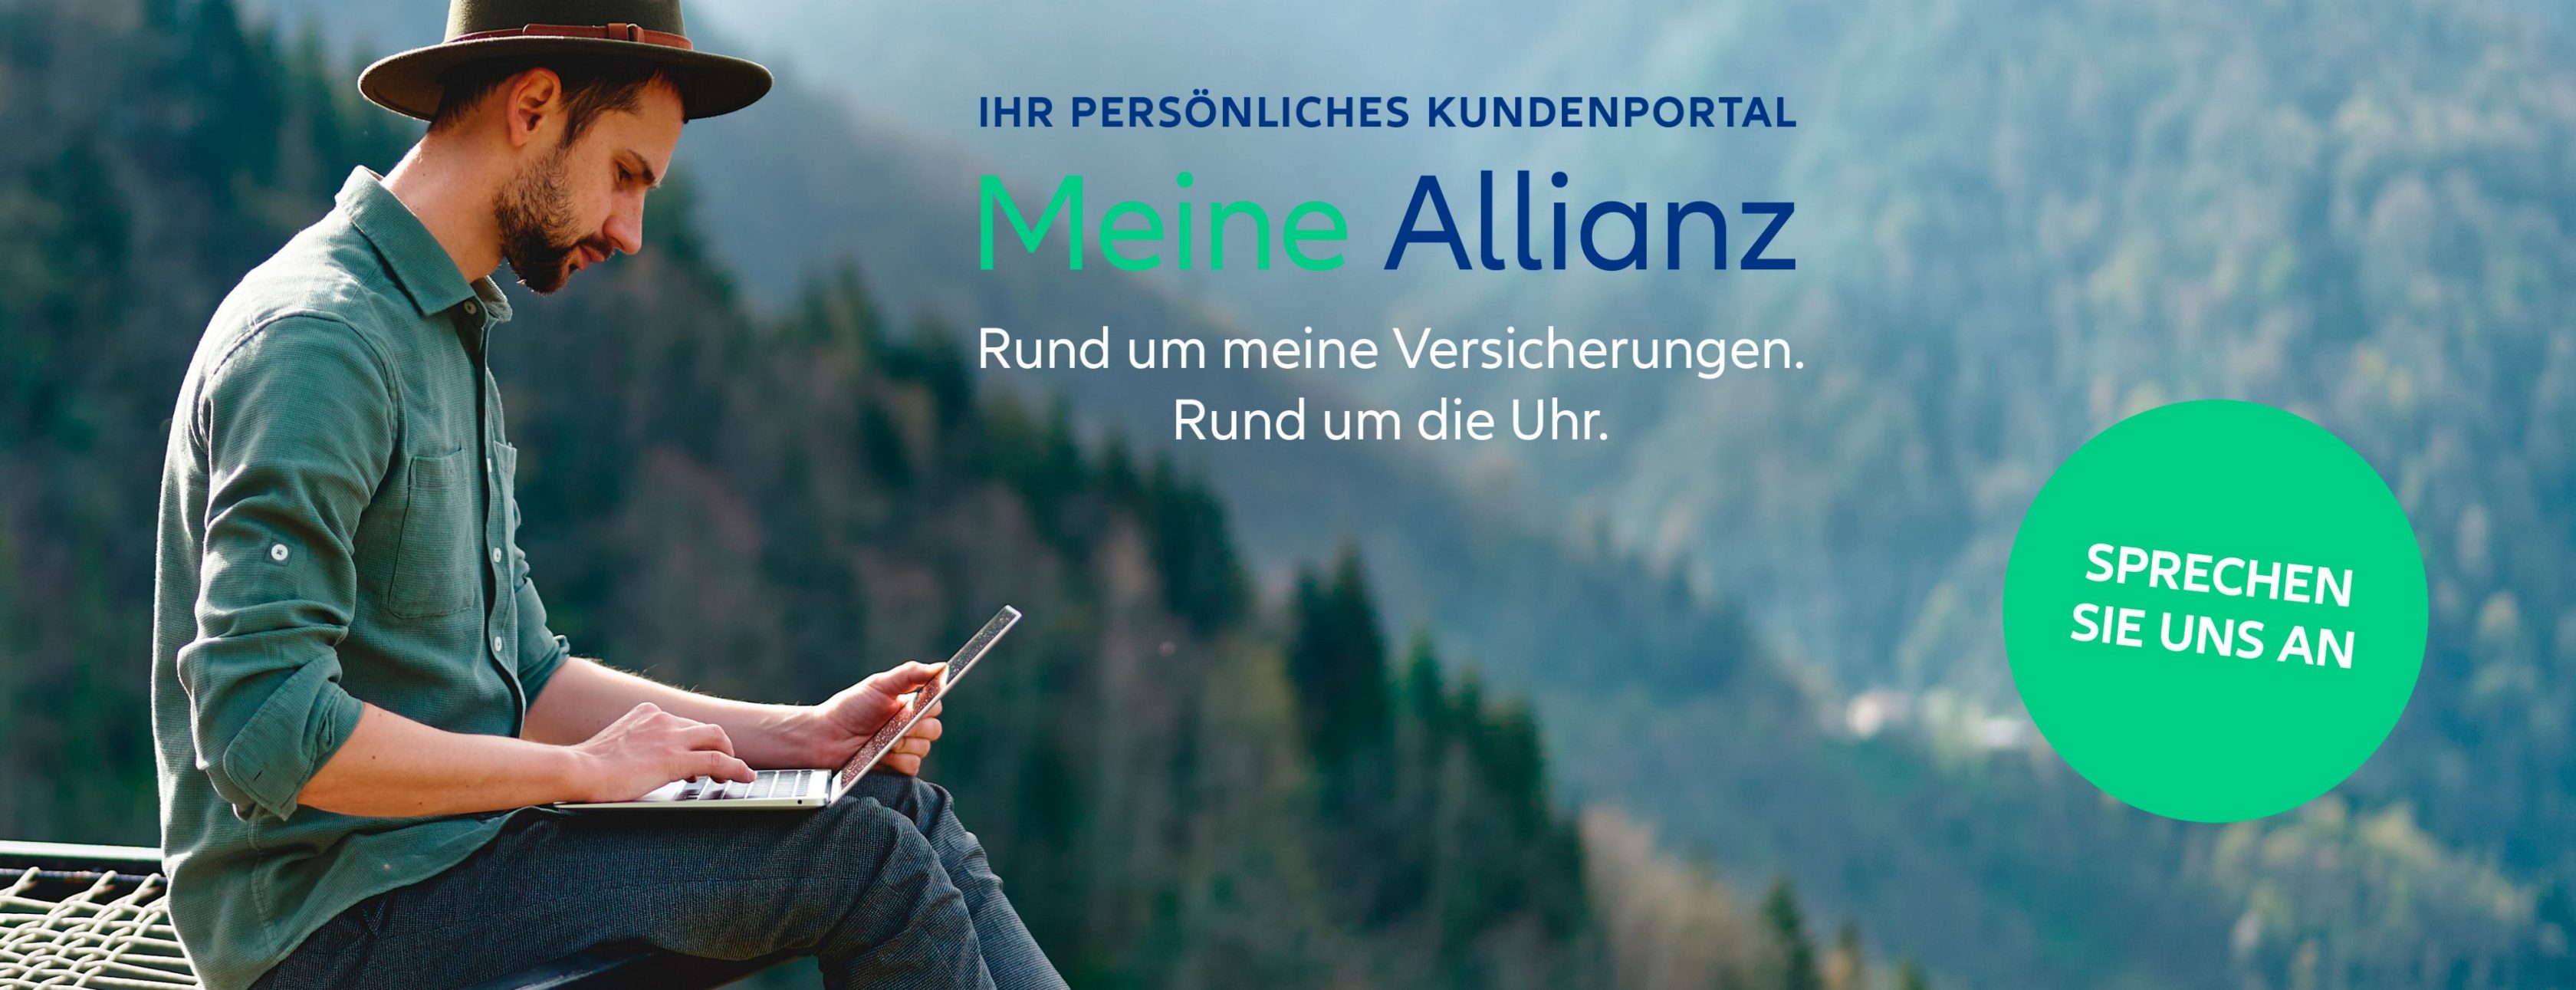 Allianz Versicherung Volker Haumann Frankfurt am Main - Allianz Volker Haumann Meine Allianz